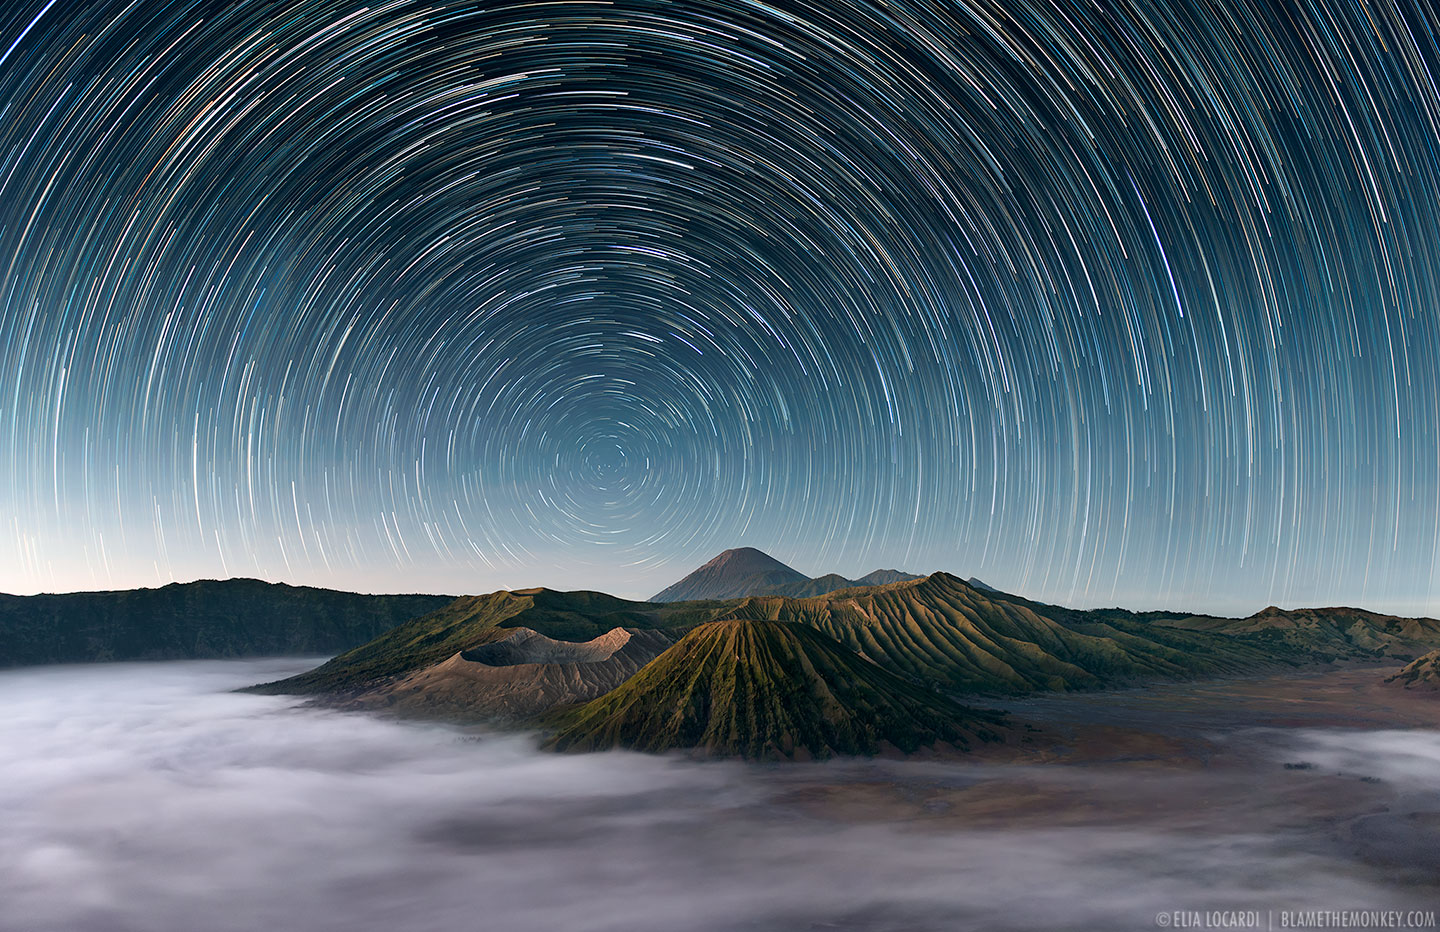 Elia-Locardi-Sleeping-Giants-Mt-Bromo-Indonesia-1440-WM-60q.jpg